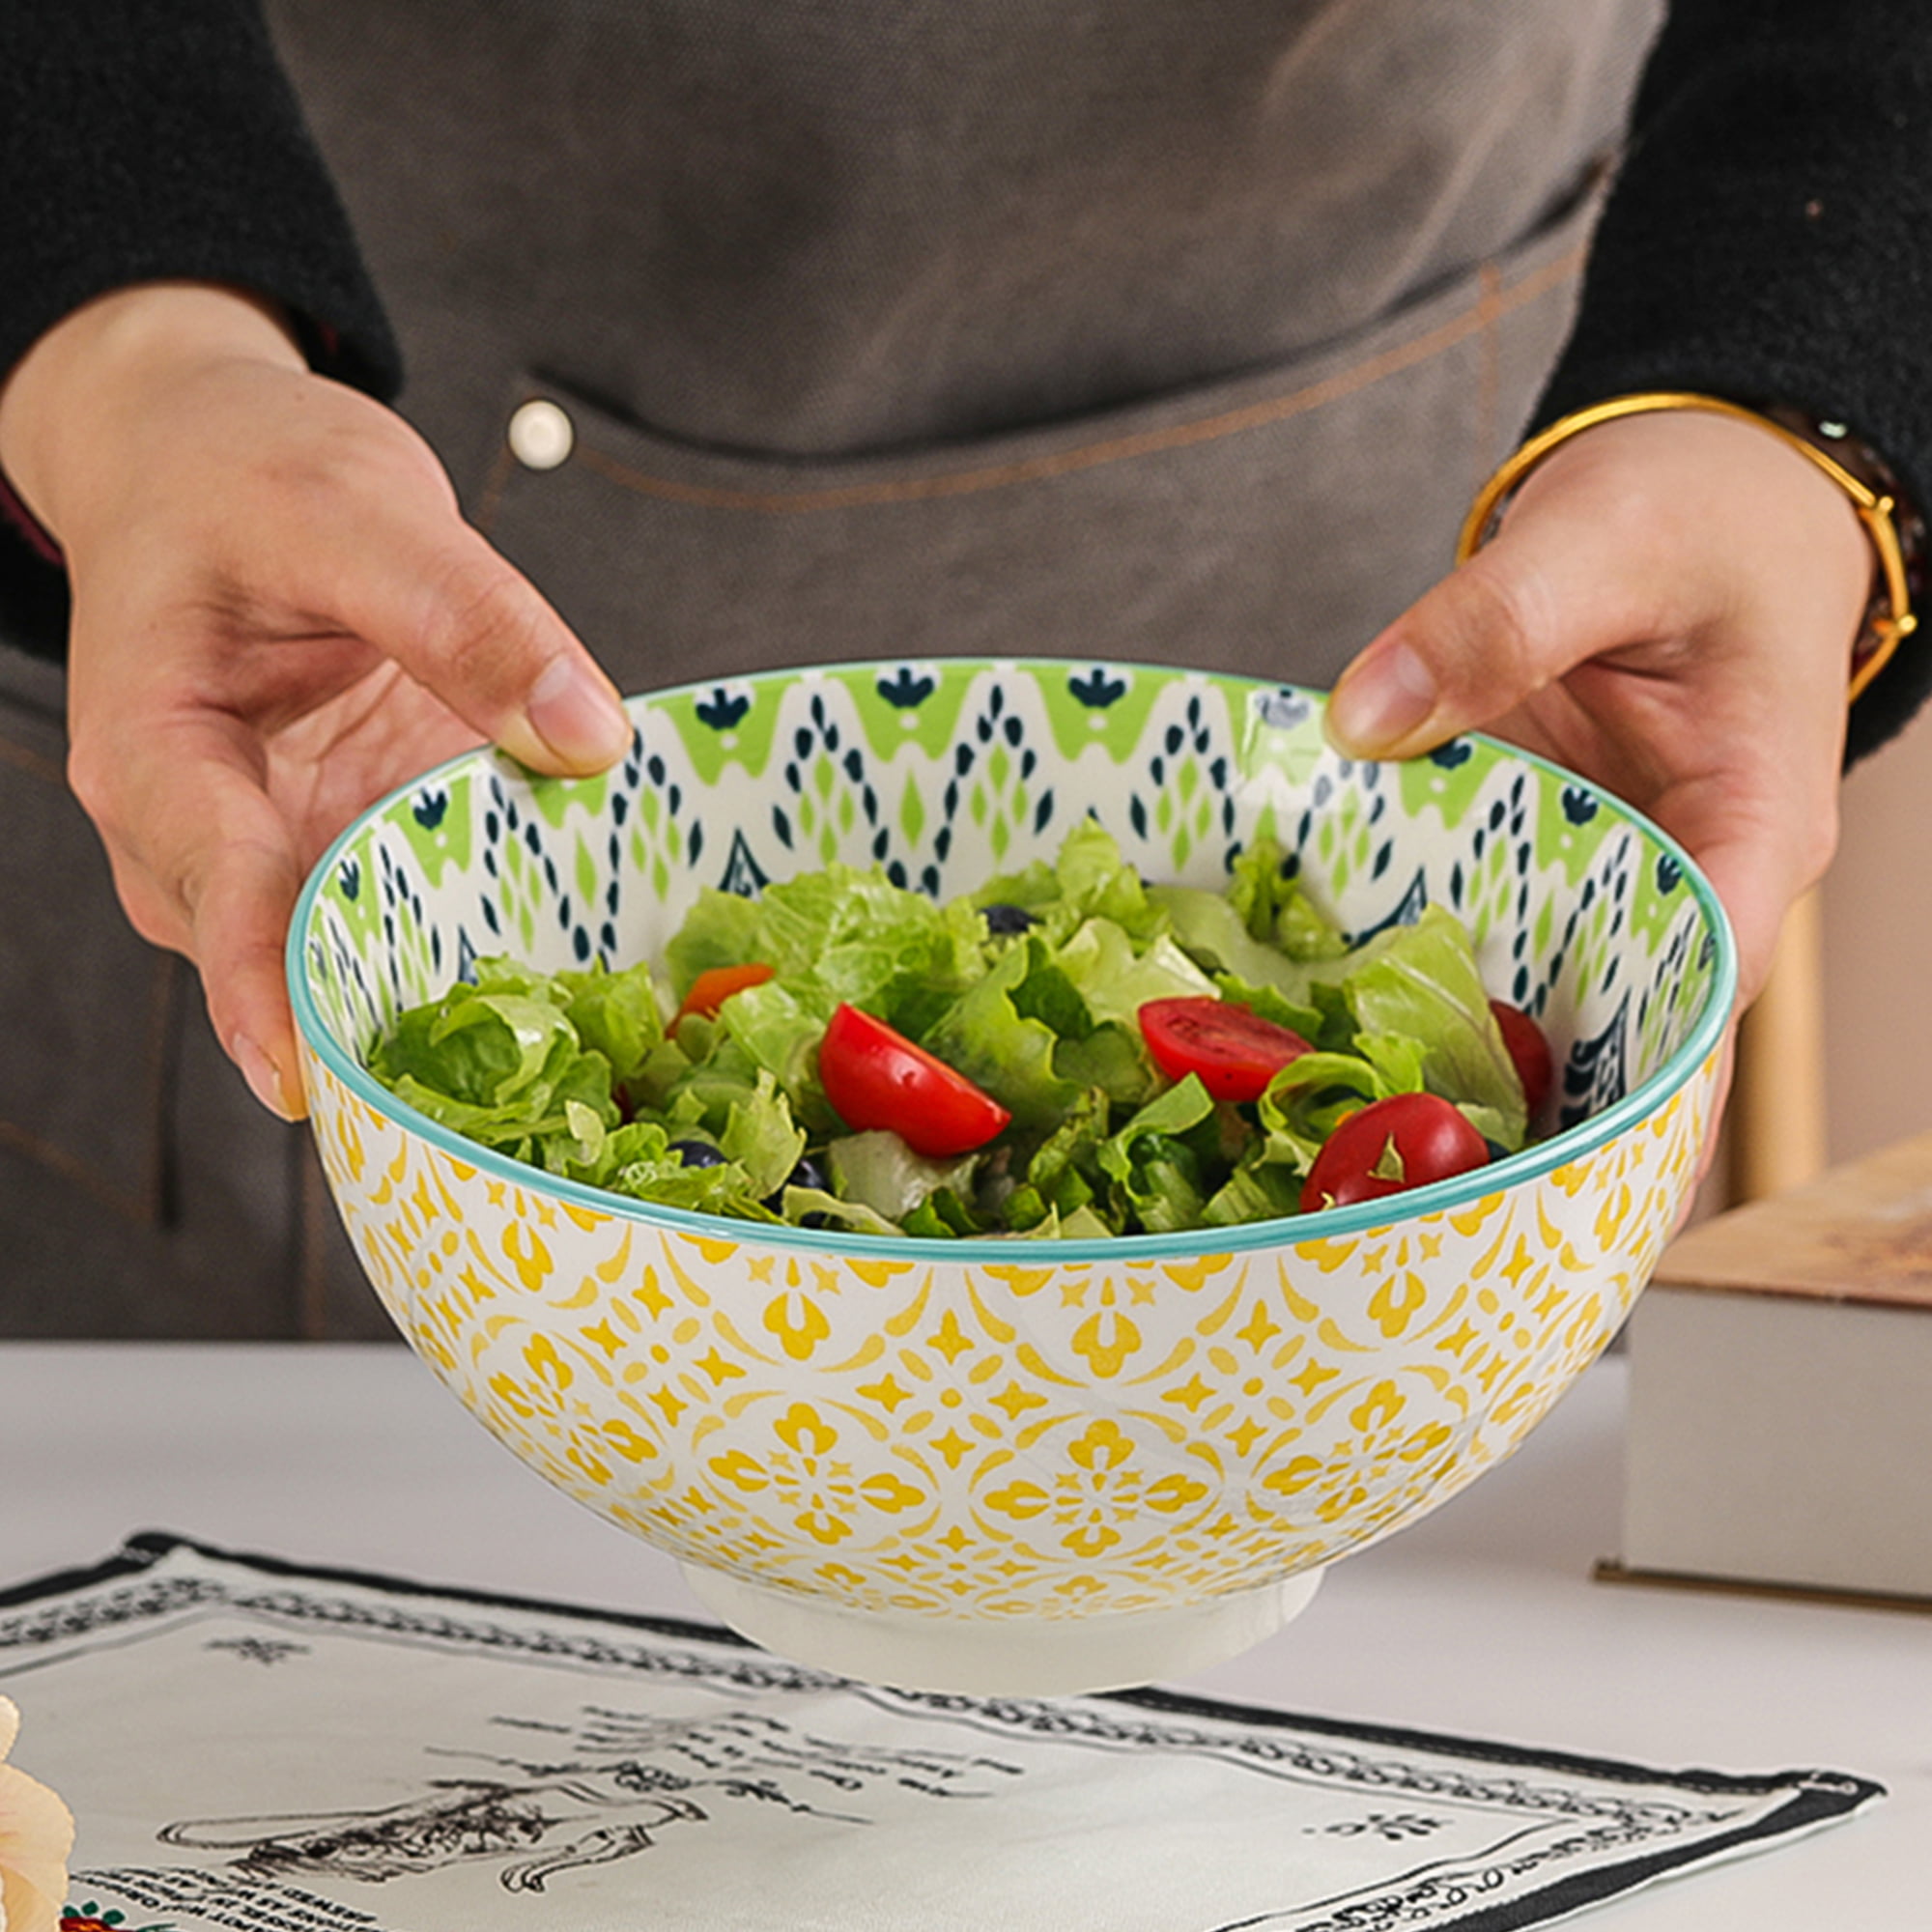 Large Plastic Mixing Bowl 3L / 5L Round Salad Serving Baking Bowl  Grey/Taupe/Red